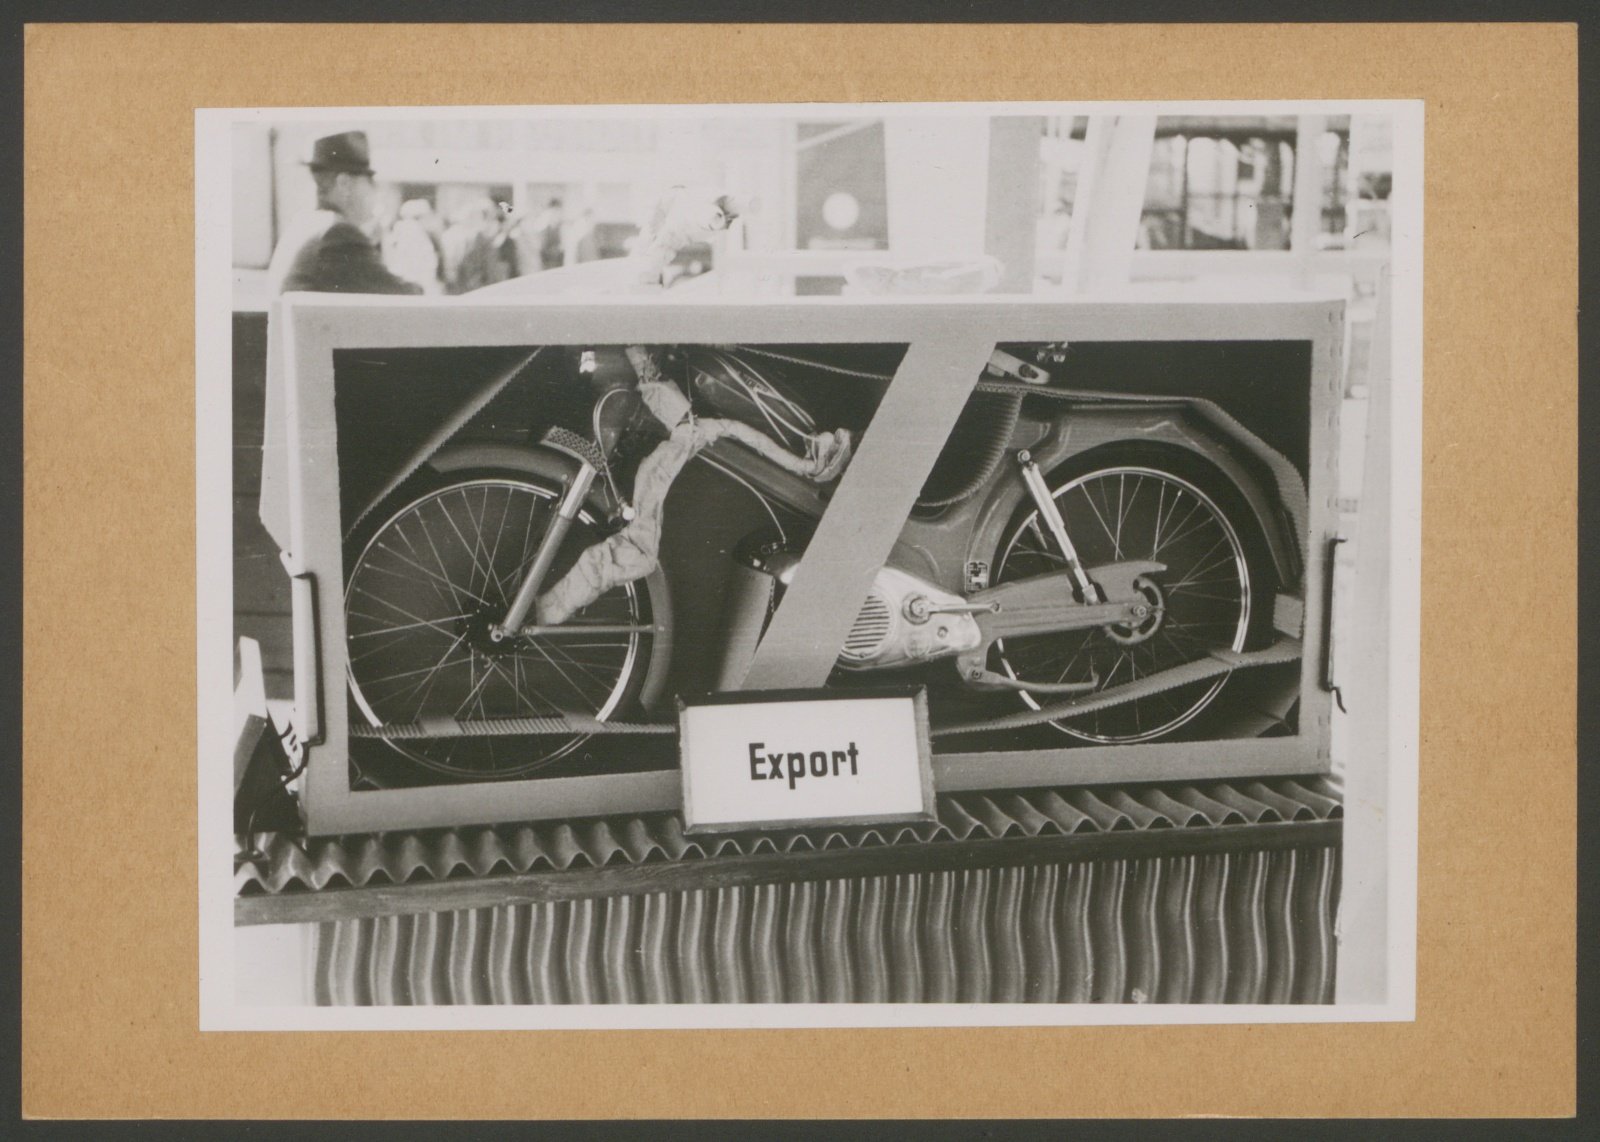 Fotografie: Exportverpackung für Zündapp Comb. I Falconette (Stiftung Deutsches Technikmuseum Berlin CC0)